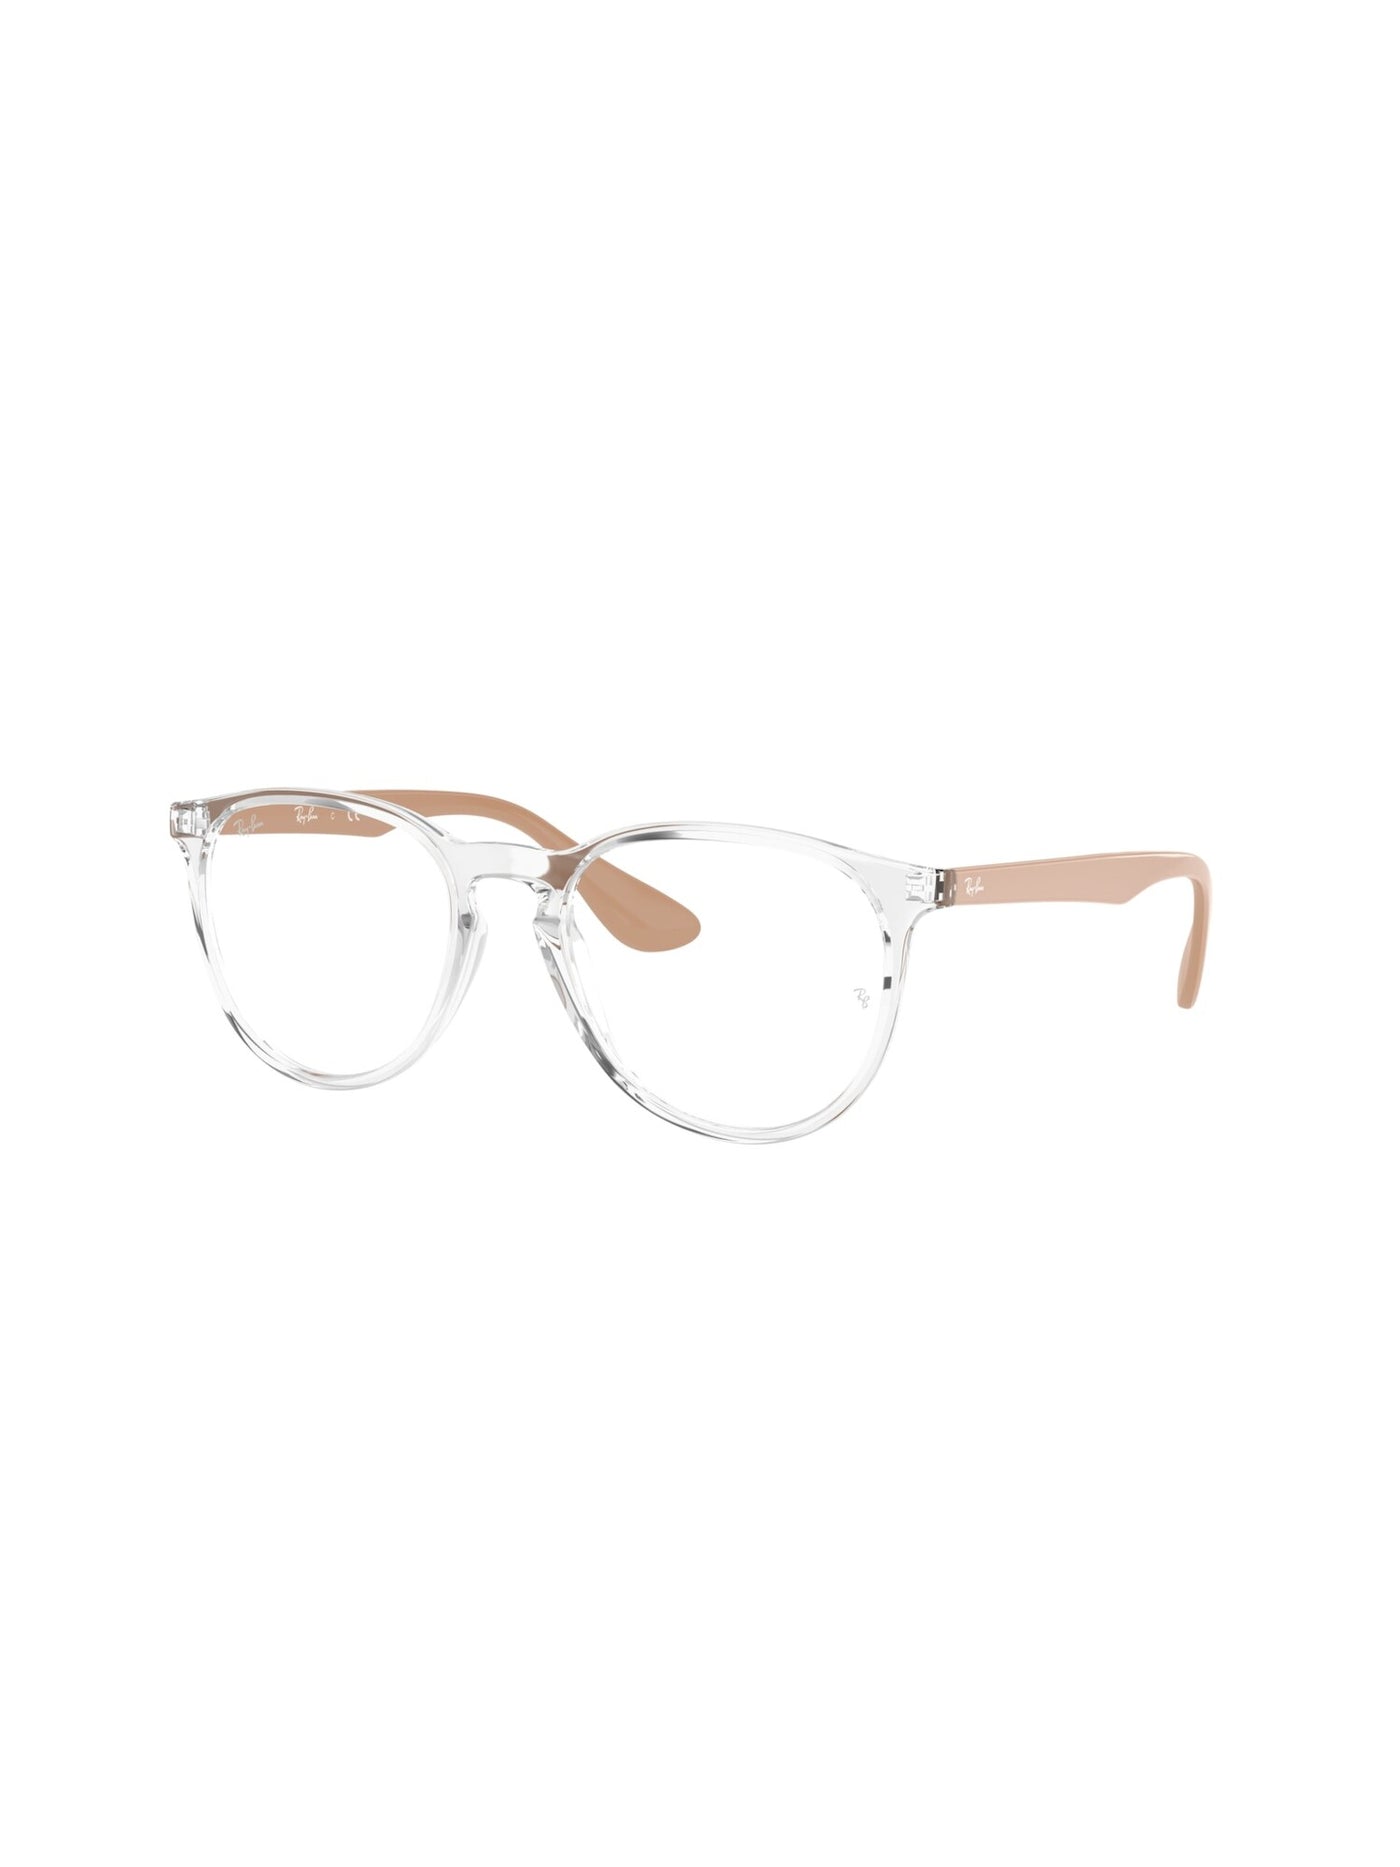 Ray-Ban RX7046 Erika Customizable Transparent 51-18-140 Phantos Full Rim Unisex Eyeglasses Frames With Case and Cloth